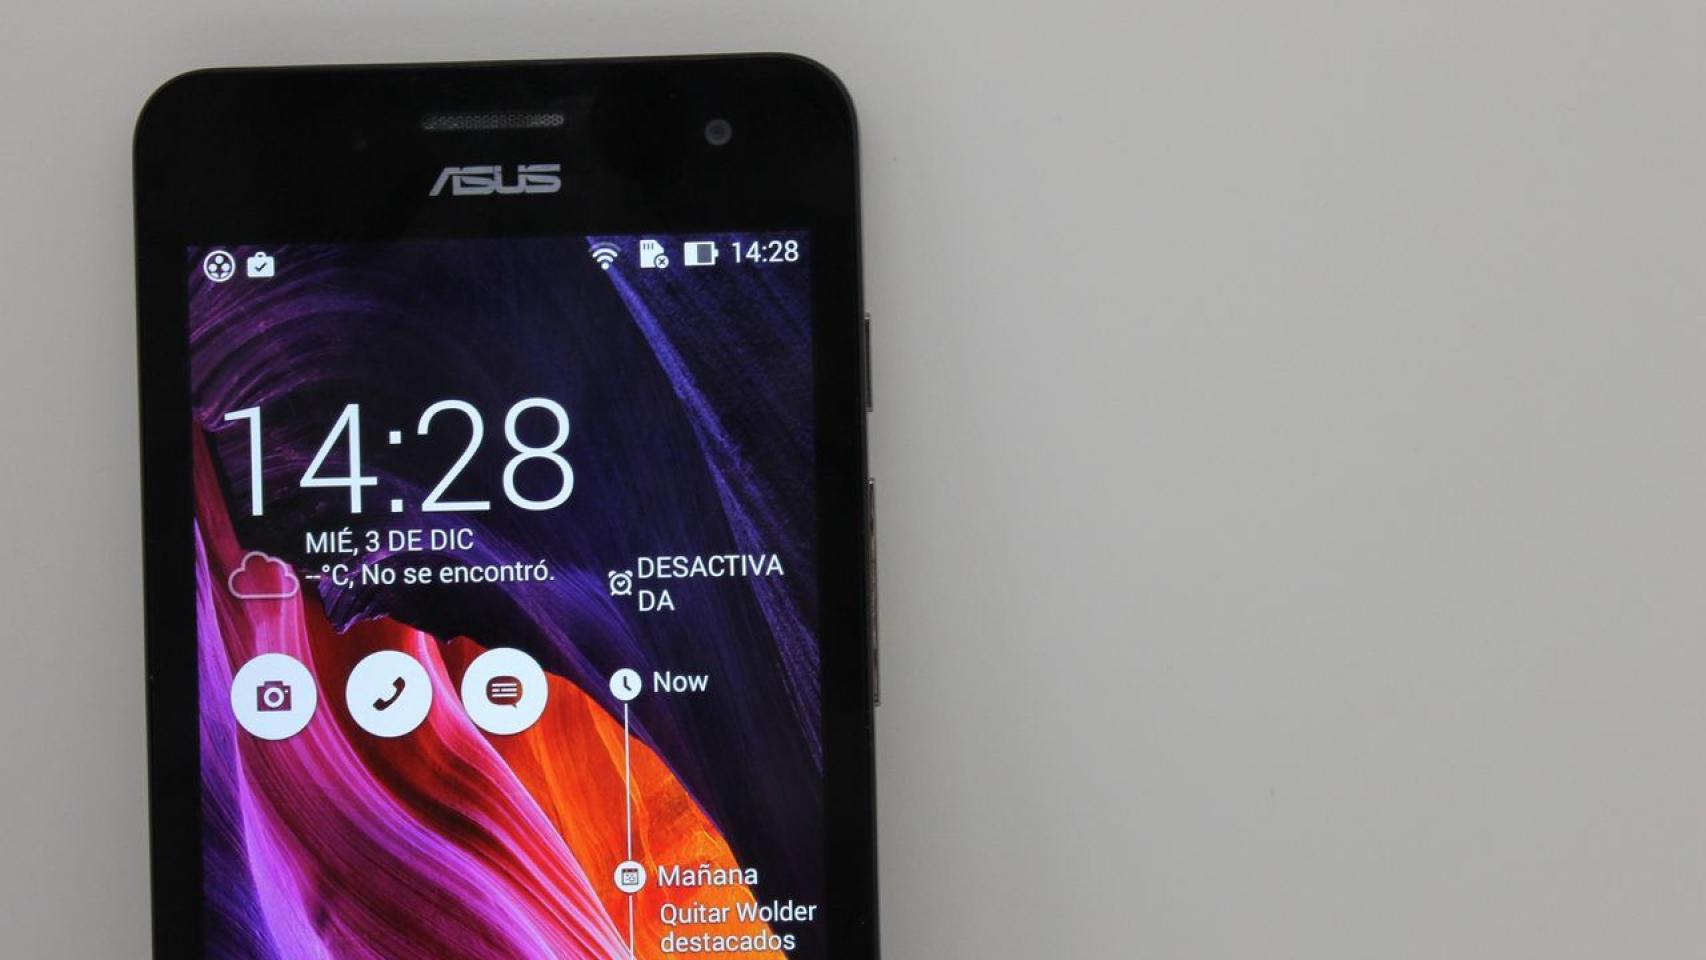 Los Asus Zenfone 4, 5 y 6 se actualizan a Android 5.0 Lollipop